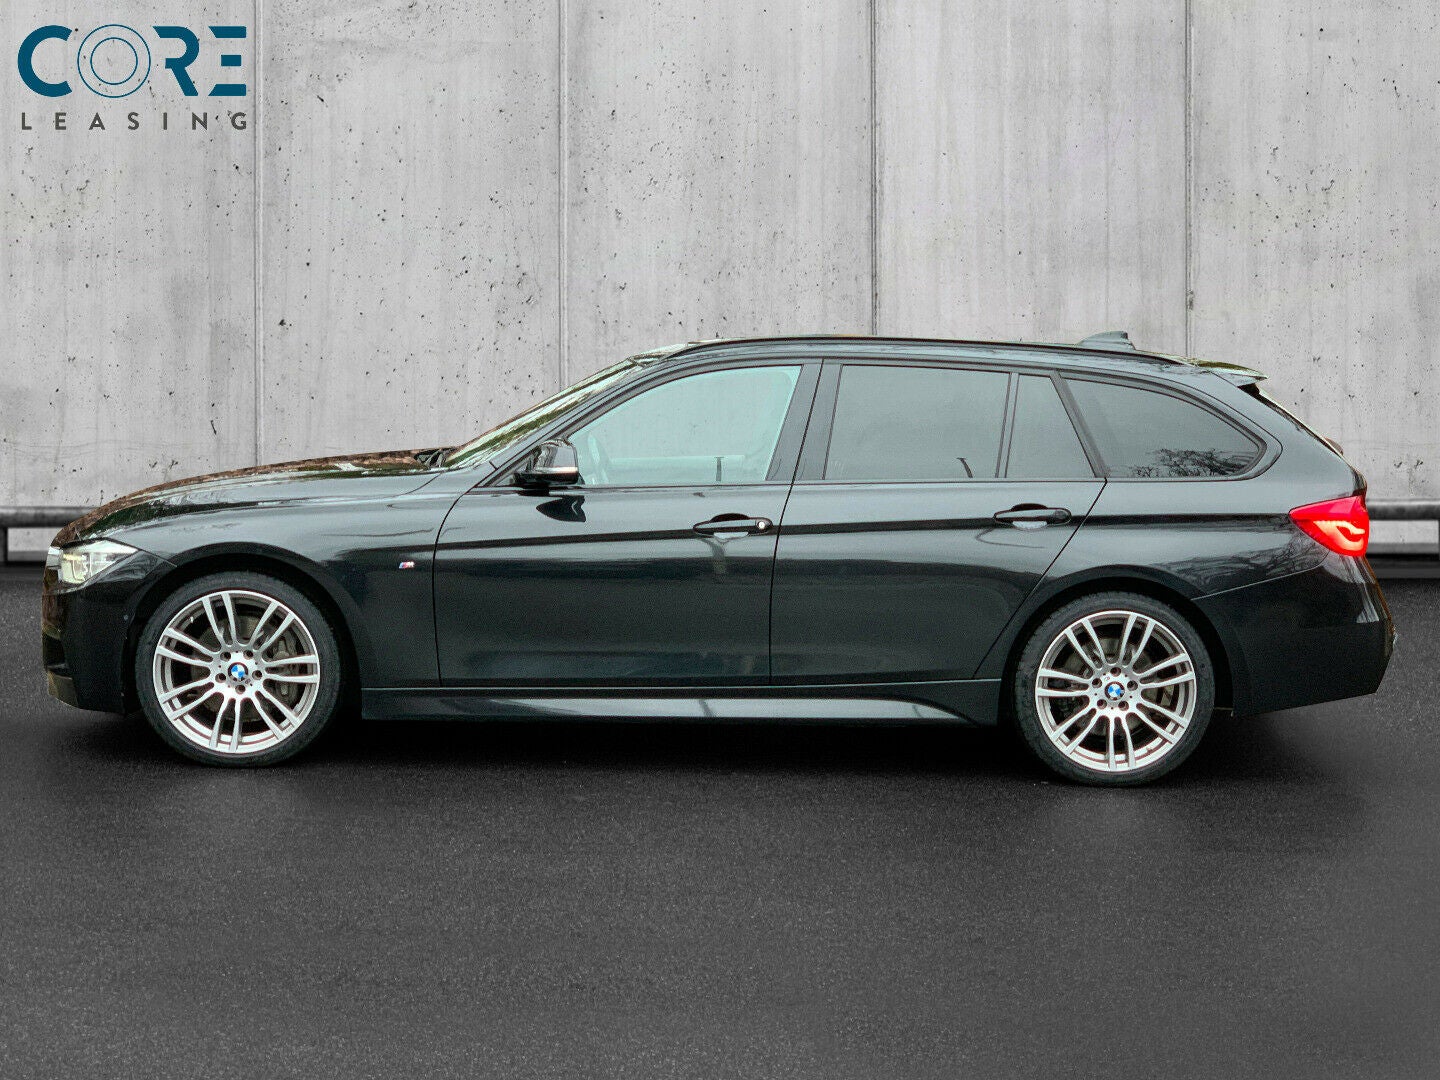 Sortmetal BMW 335d Touring xDrive aut. fra 2016 parkeret foran en betonmur. CORE Leasing A/S er eksperter i BMW leasing.